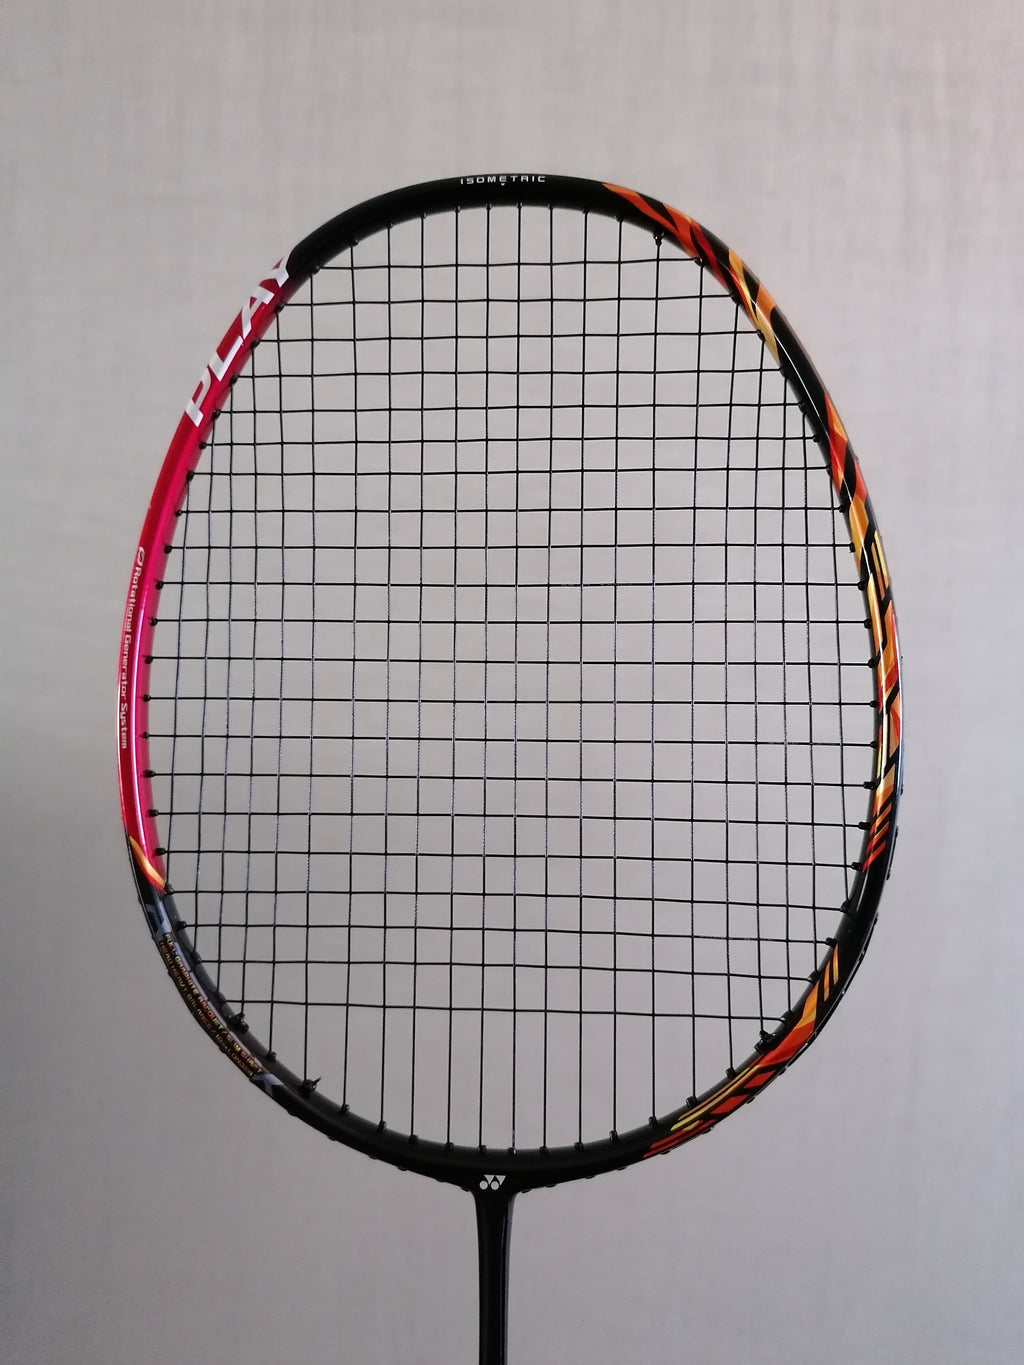 Yonex Astrox 99 Play 4U badminton racket | badminton racket review